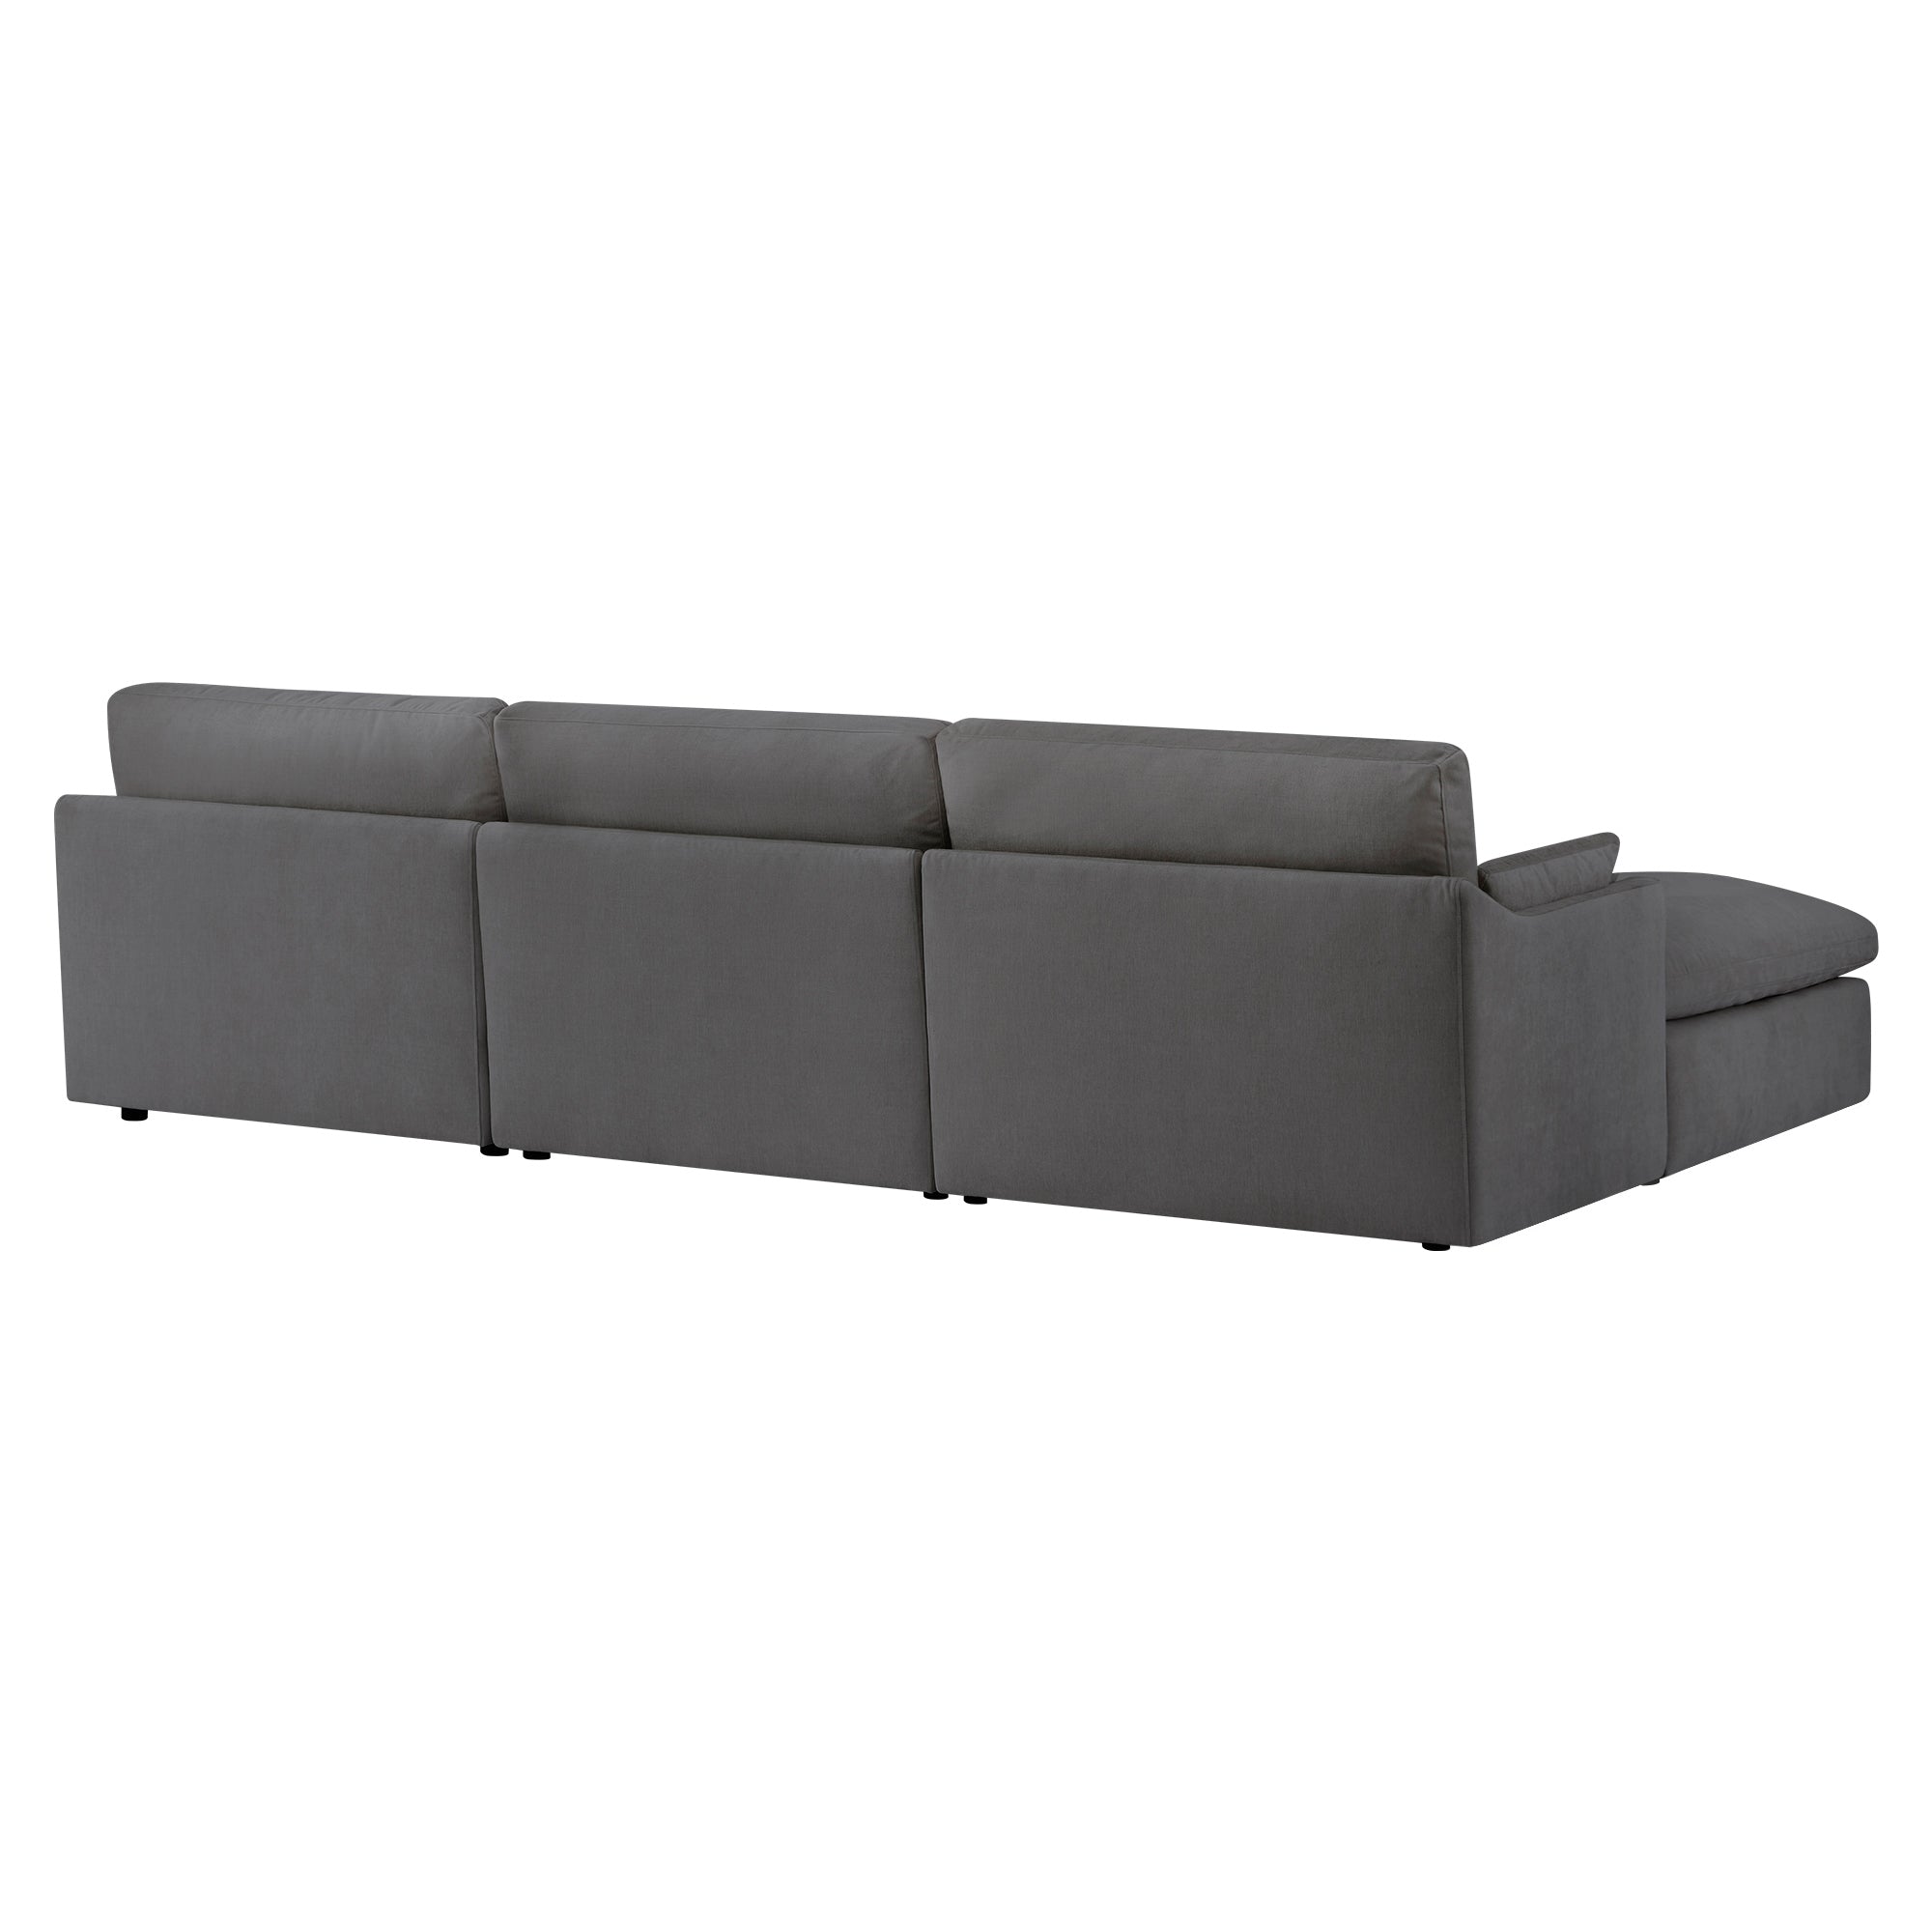 CHITA LIVING-Kenna Modular 4-Piece Sofa-Chaise Sectional (131